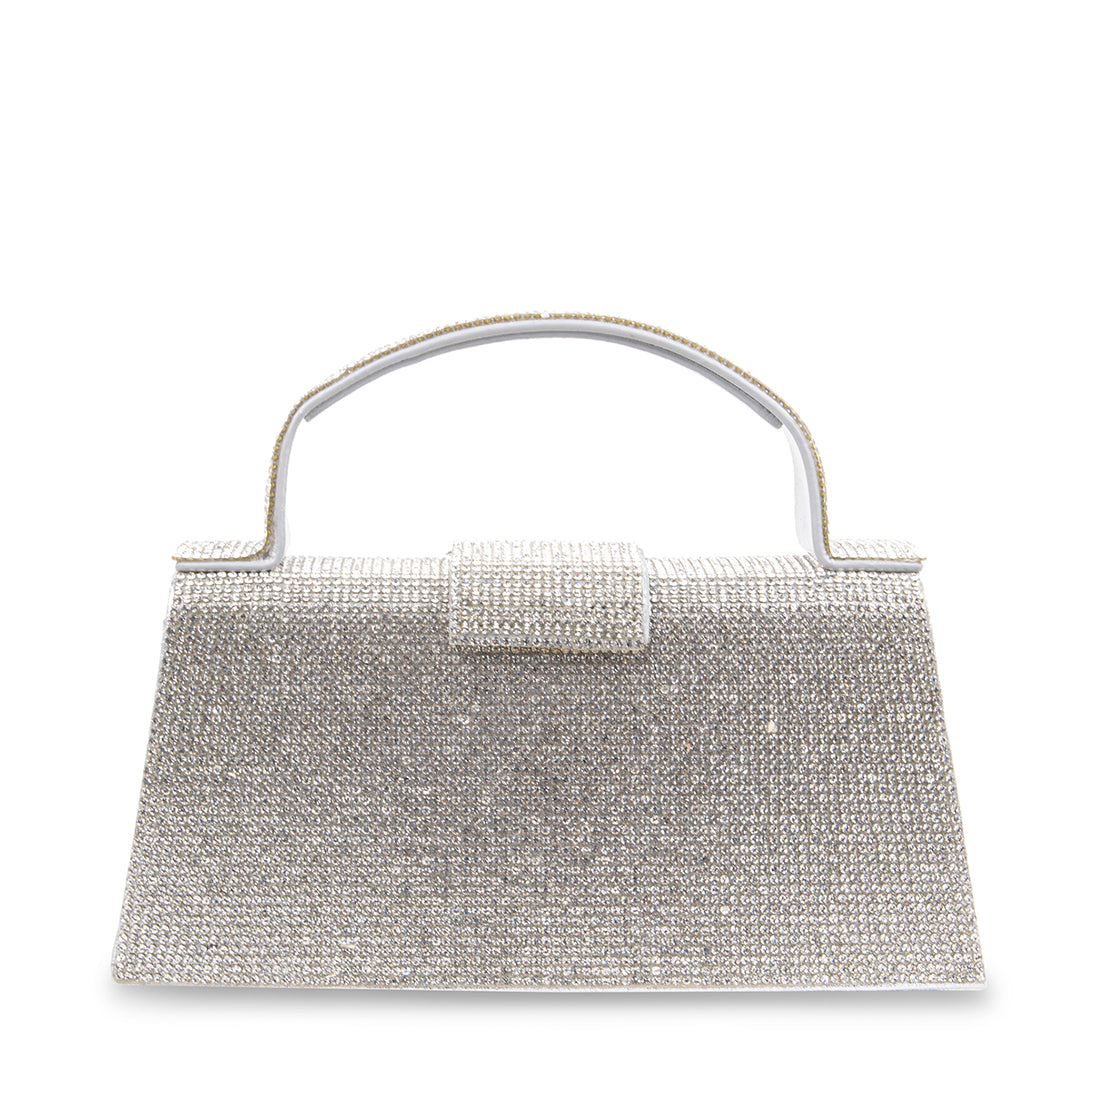 BJACQUES Silver Clutches & Evening Bags | Women's Designer Handbags ...